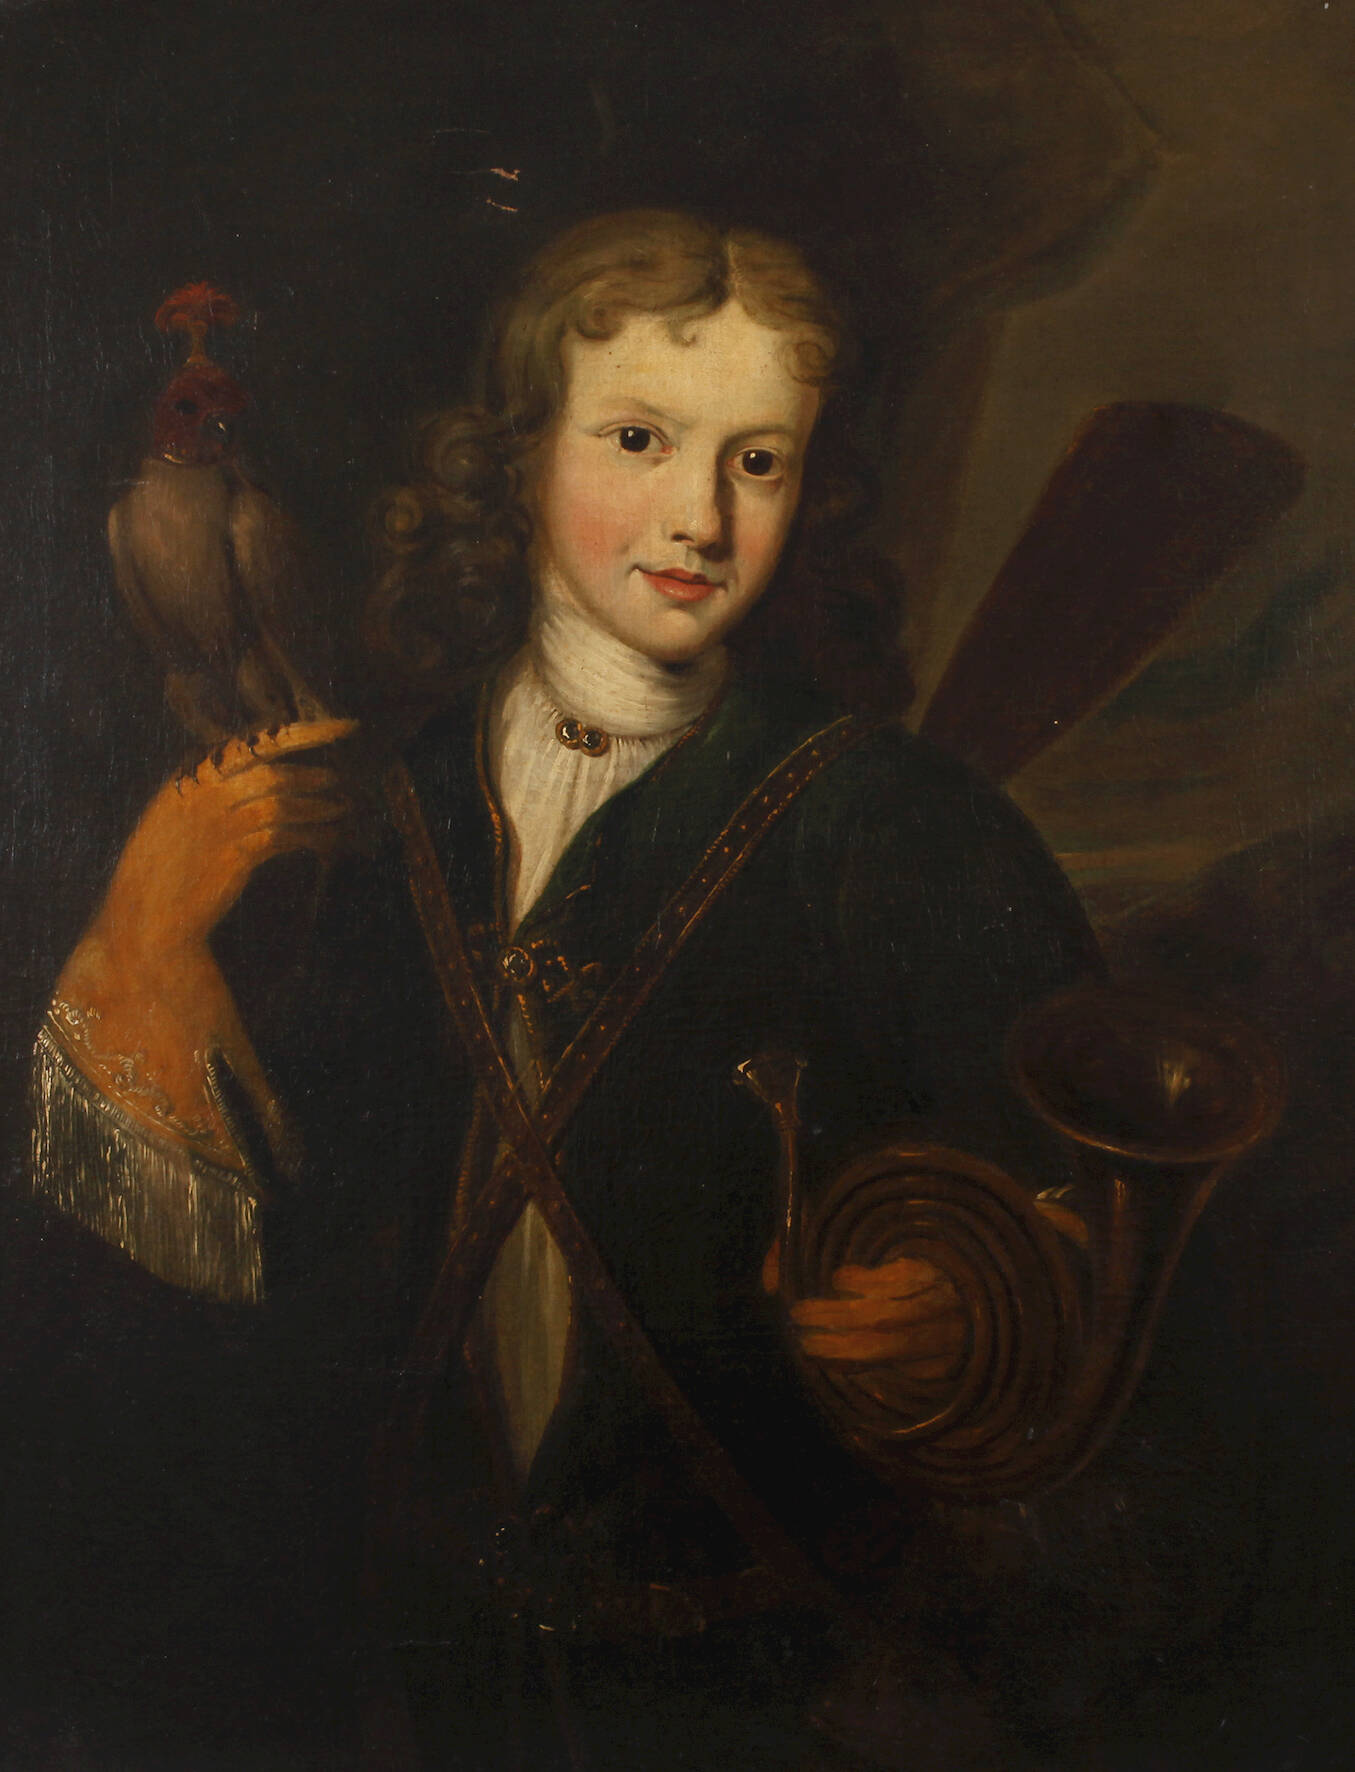 Portrait des Johann Peter Georg Leers als Jäger